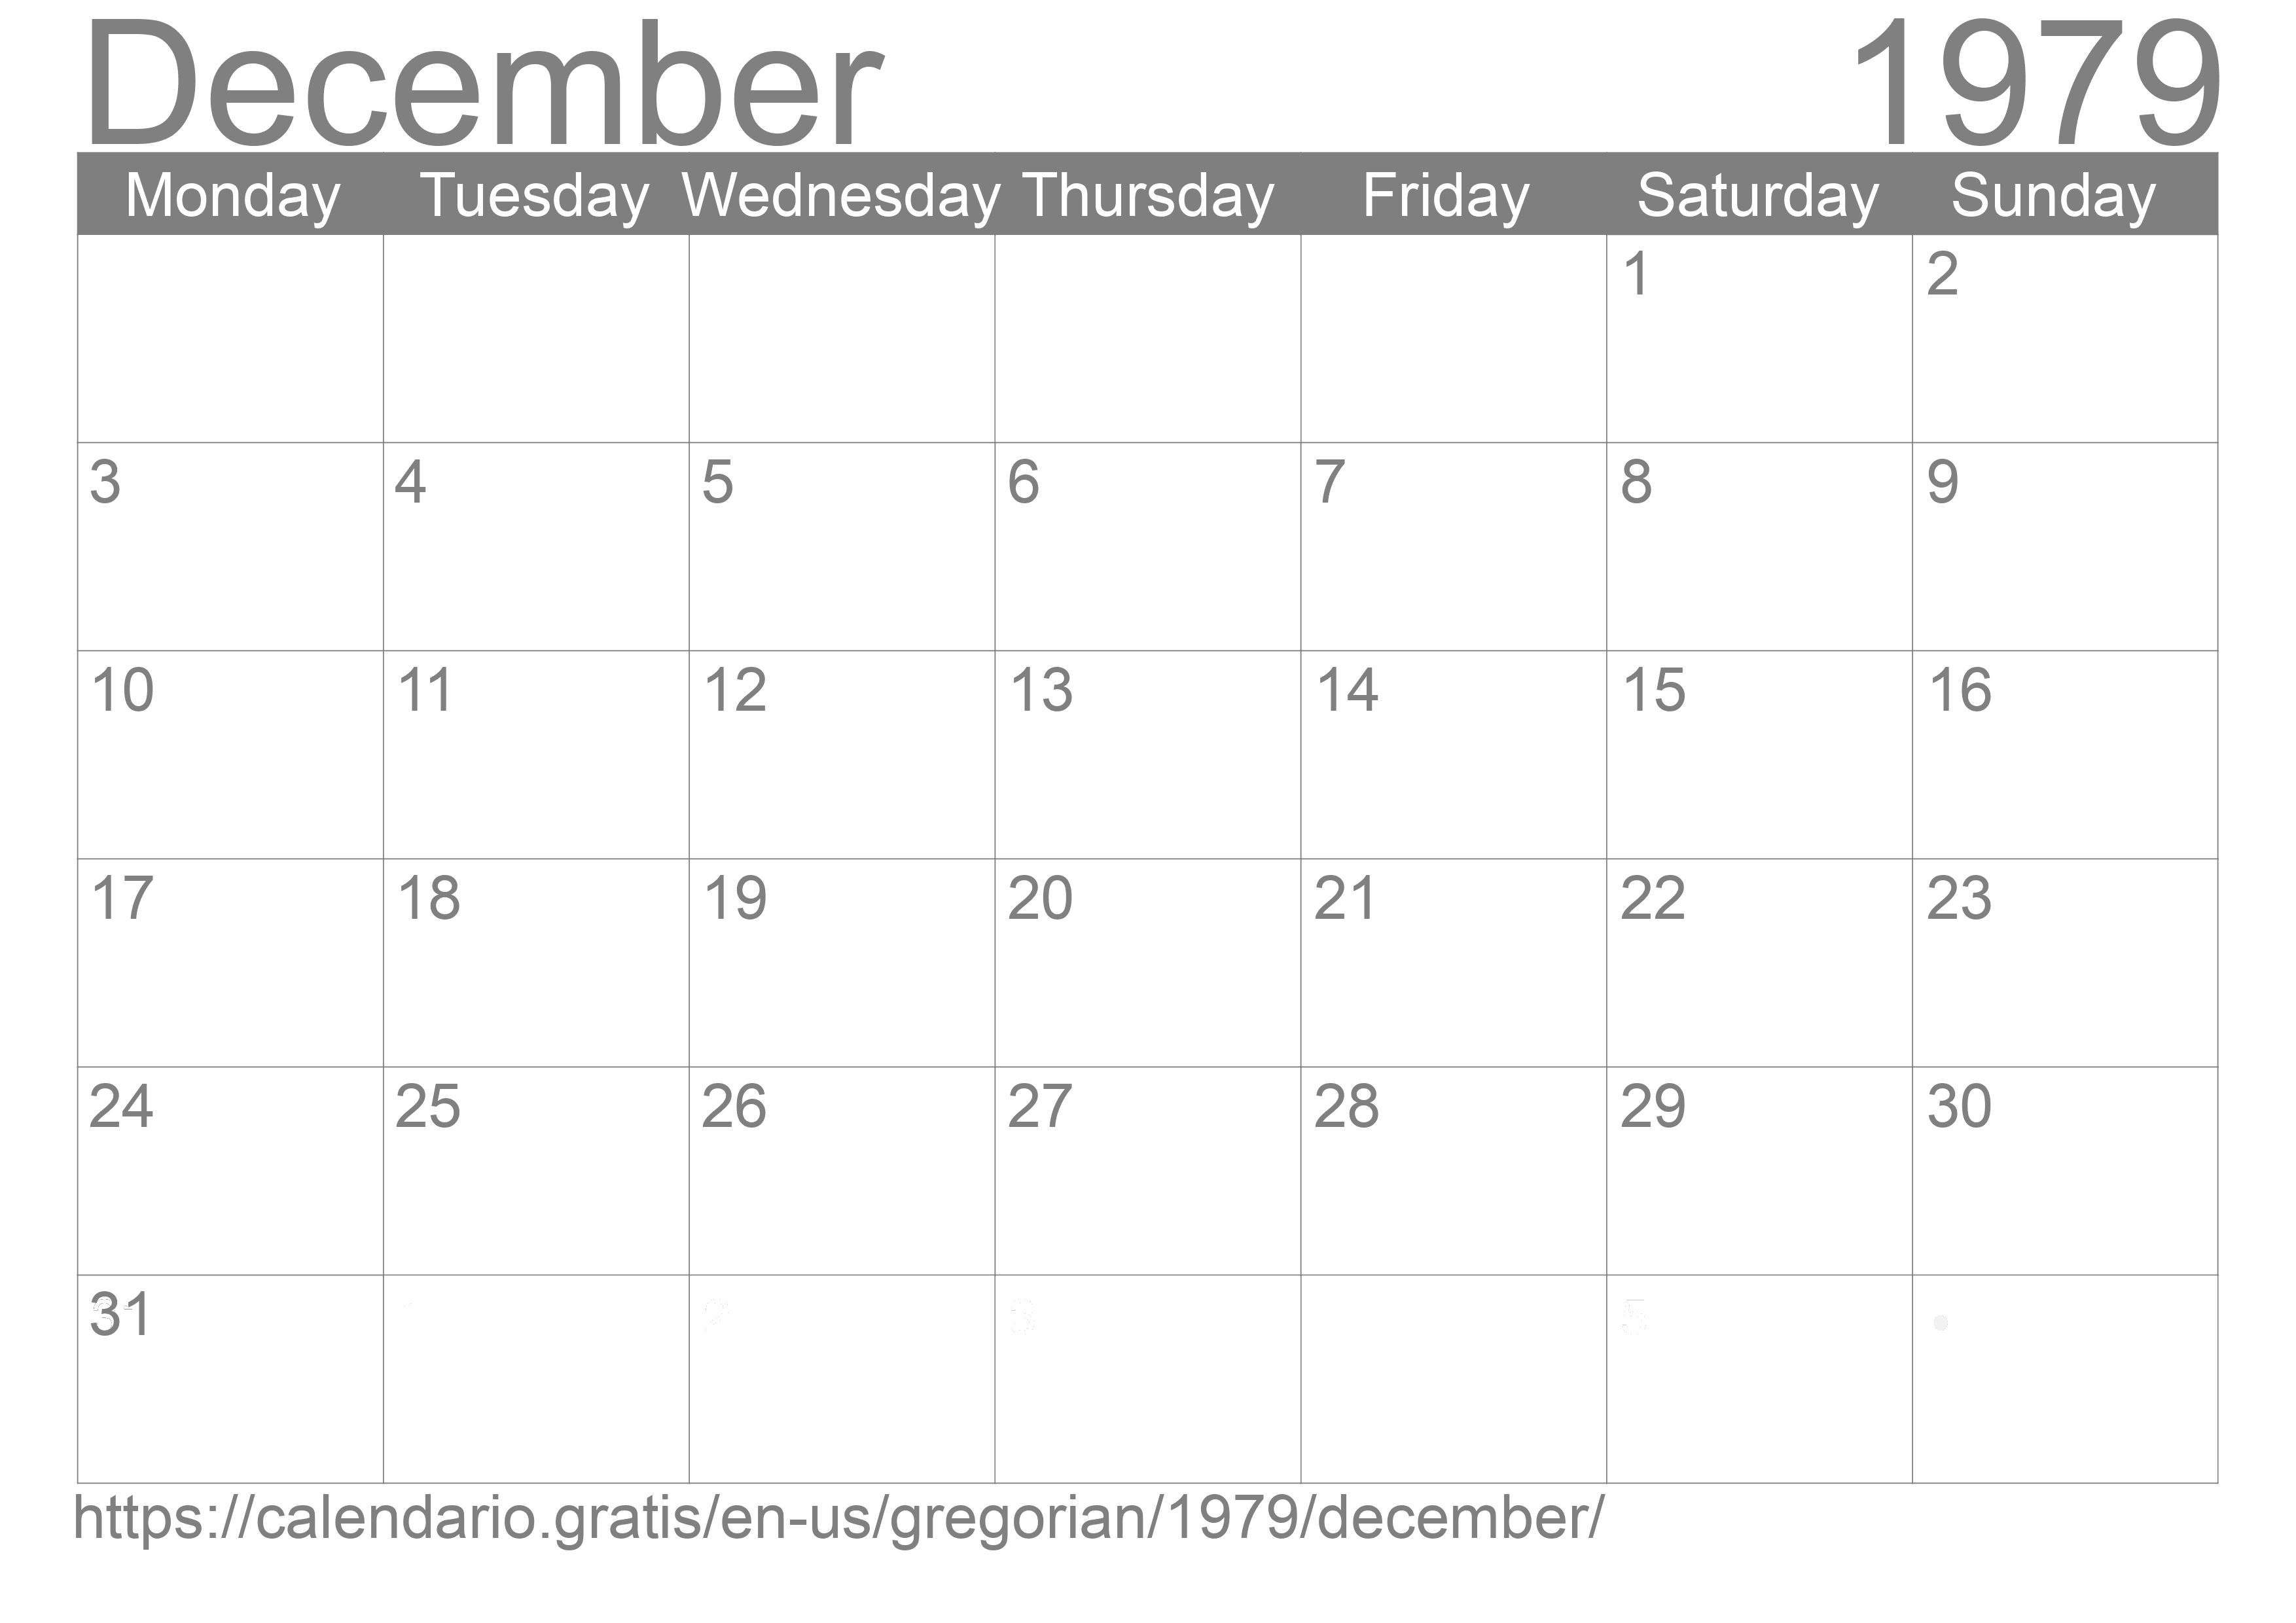 Calendar December 1979 to print